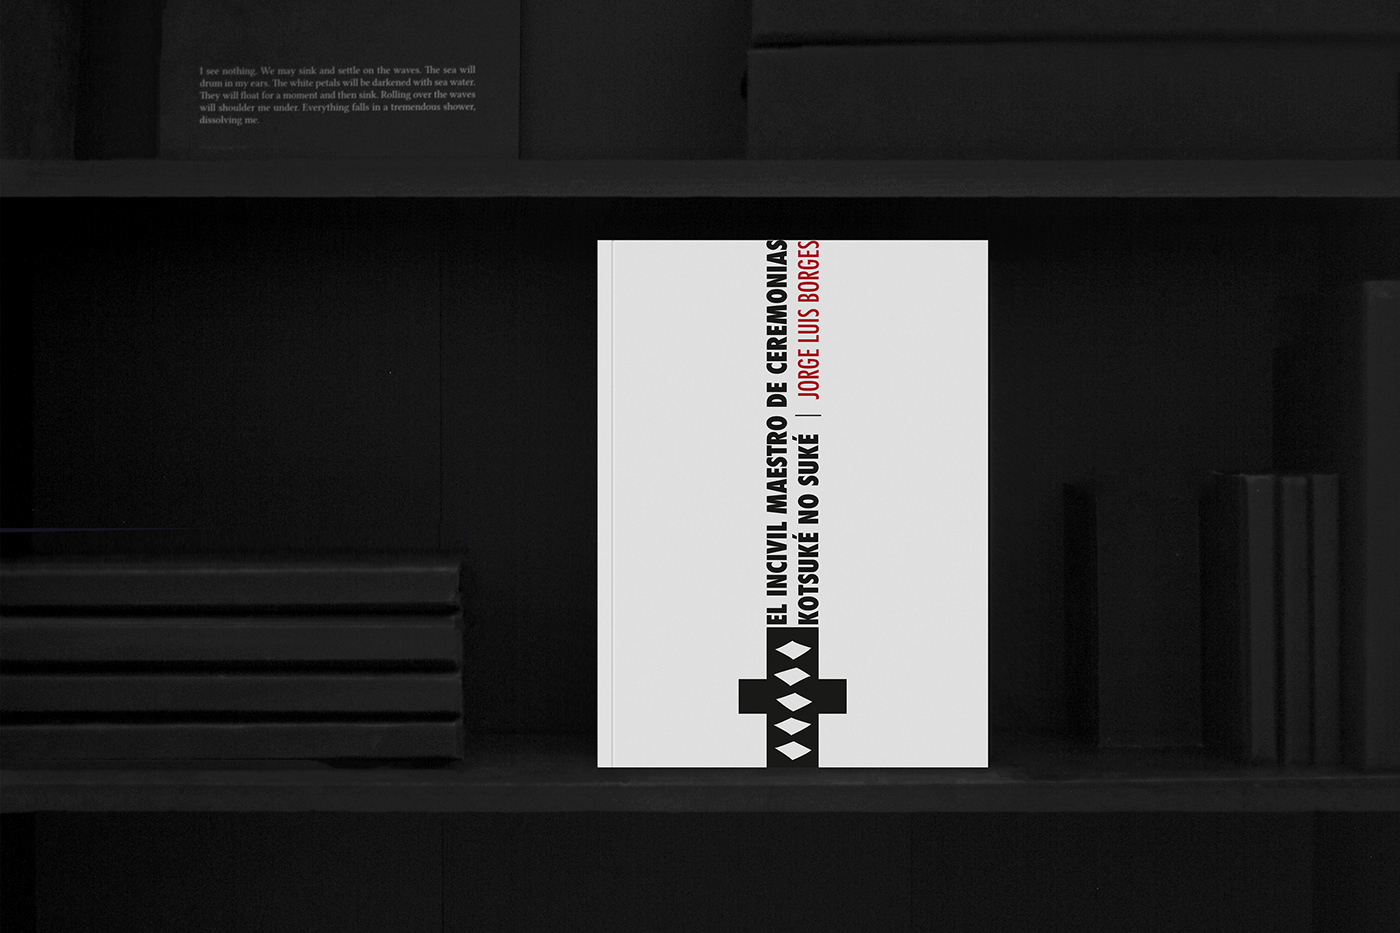 book libro visual tipography tiopografia design diseño editorial graphic grafico